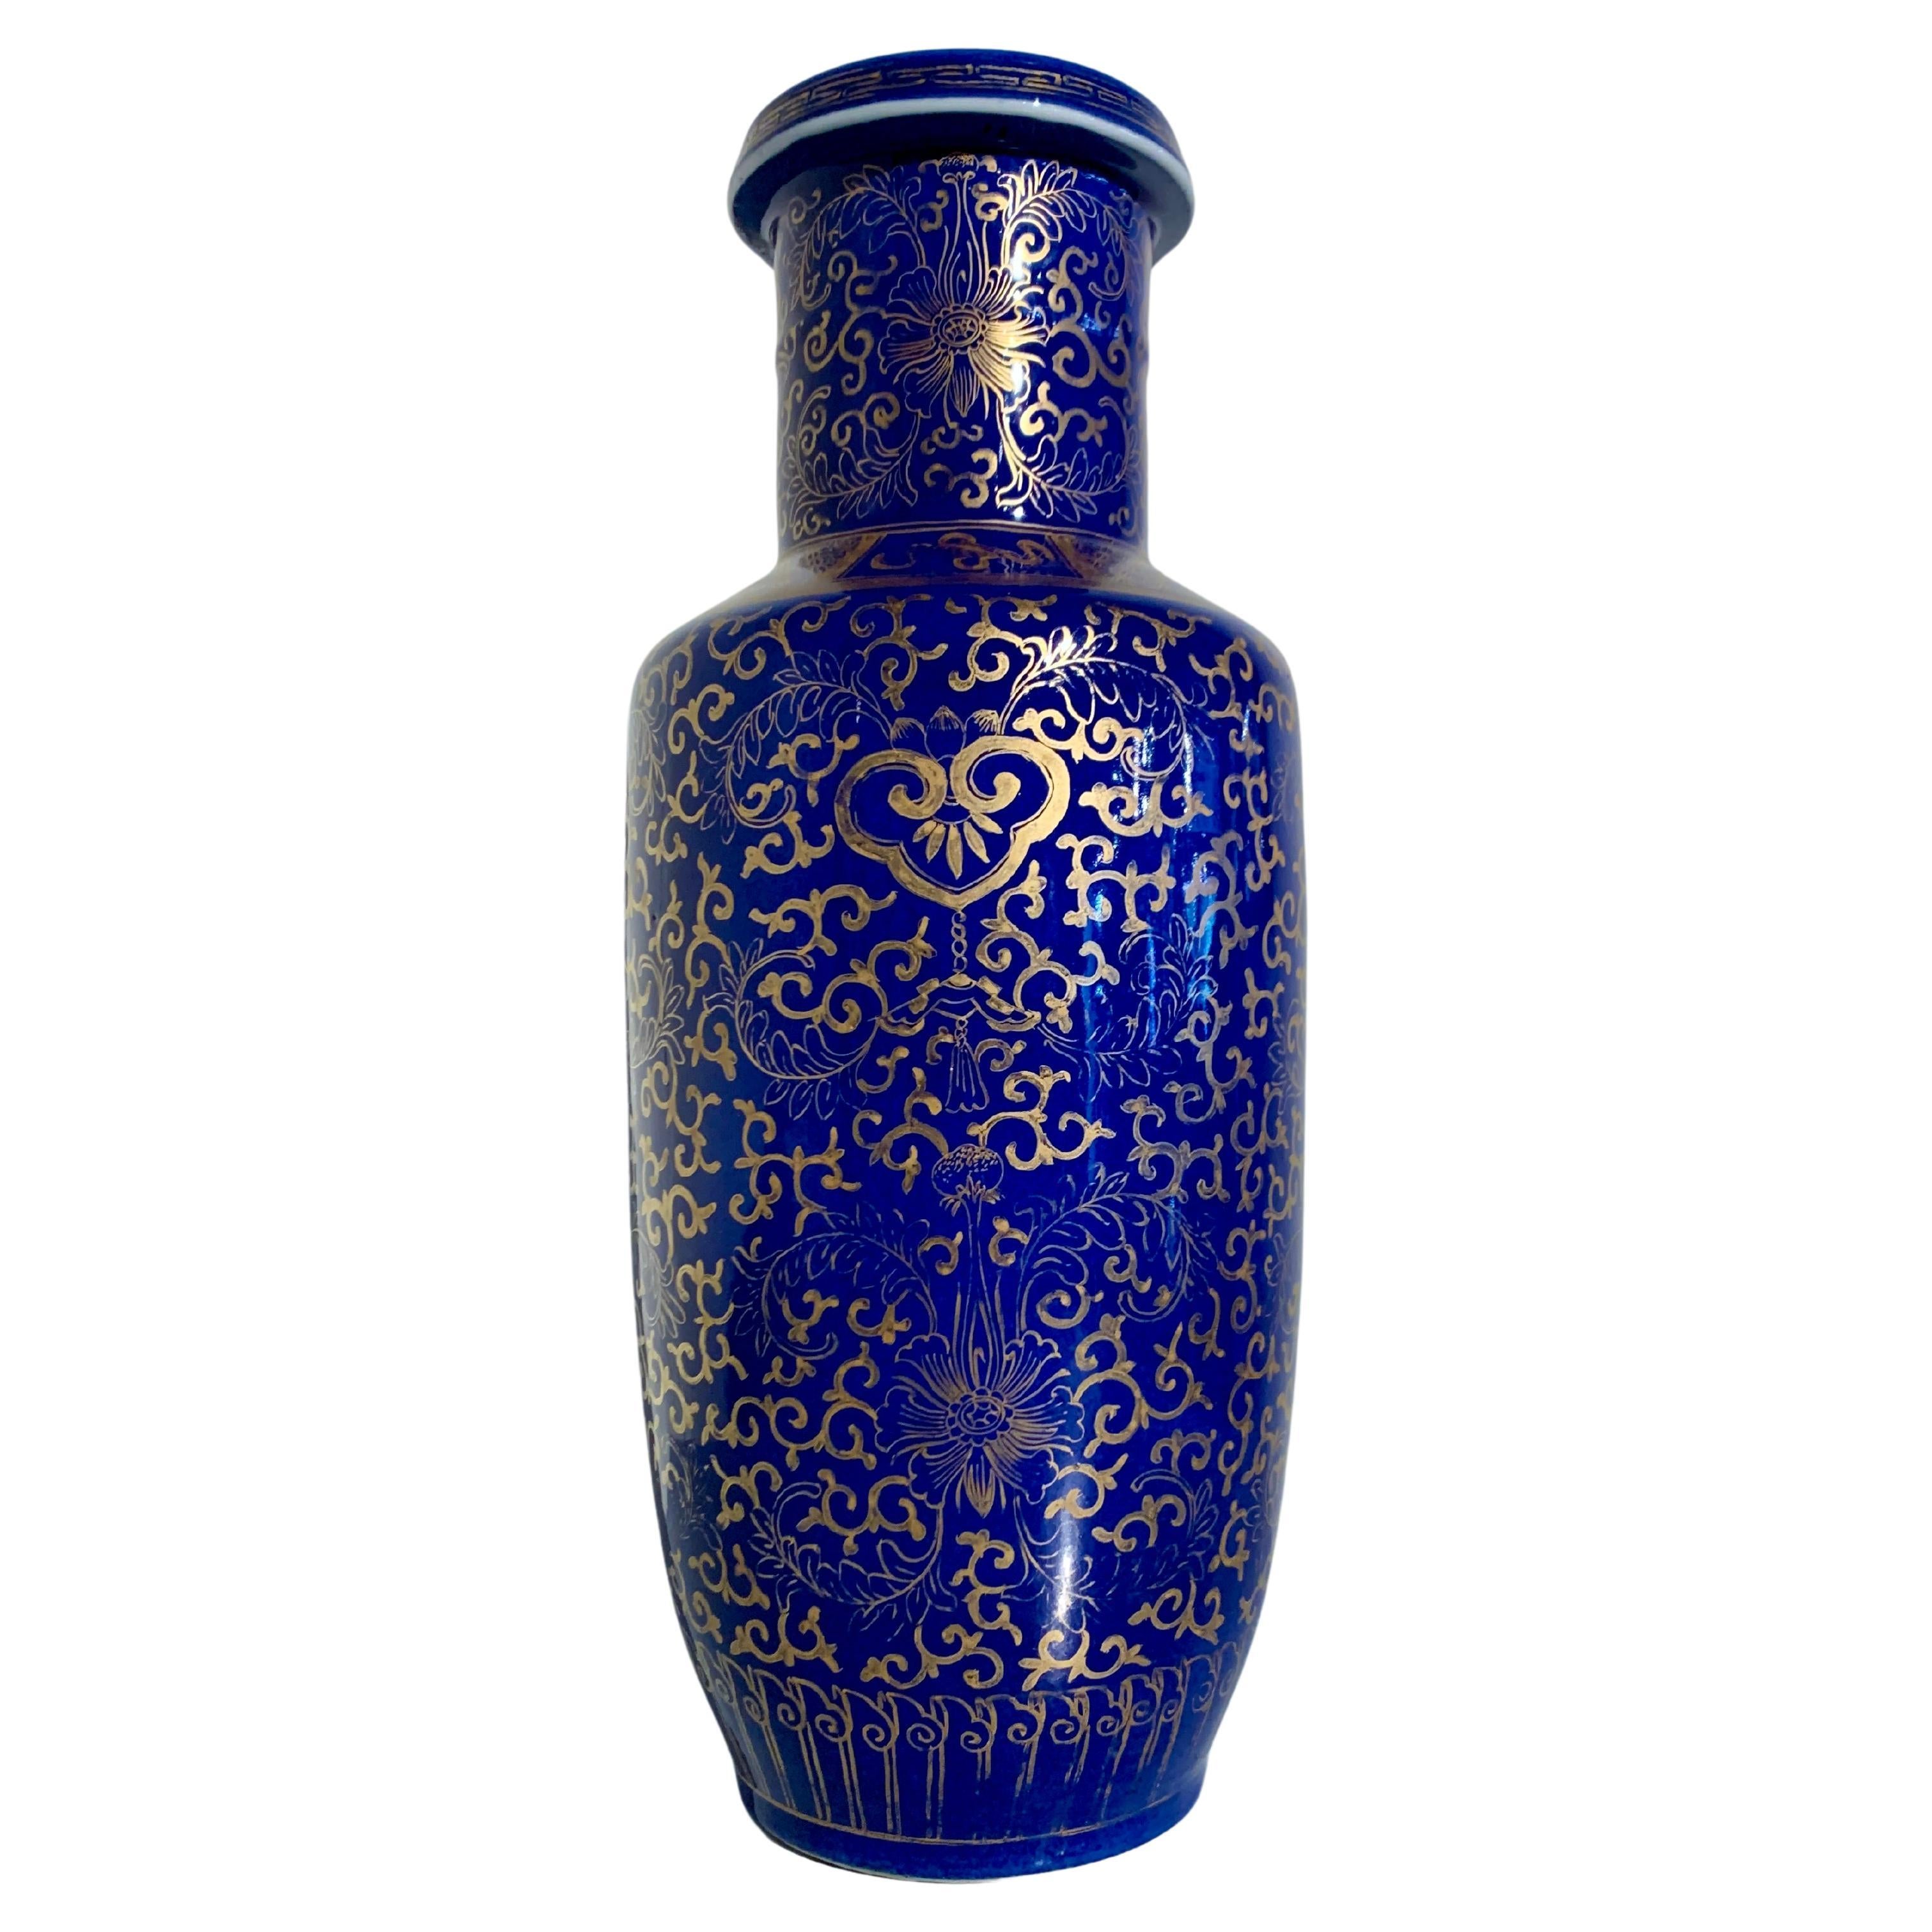 Chinese Powder Blue Gilt Decorated Rouleau Vase, Qing Dynasty, c. 1900, China